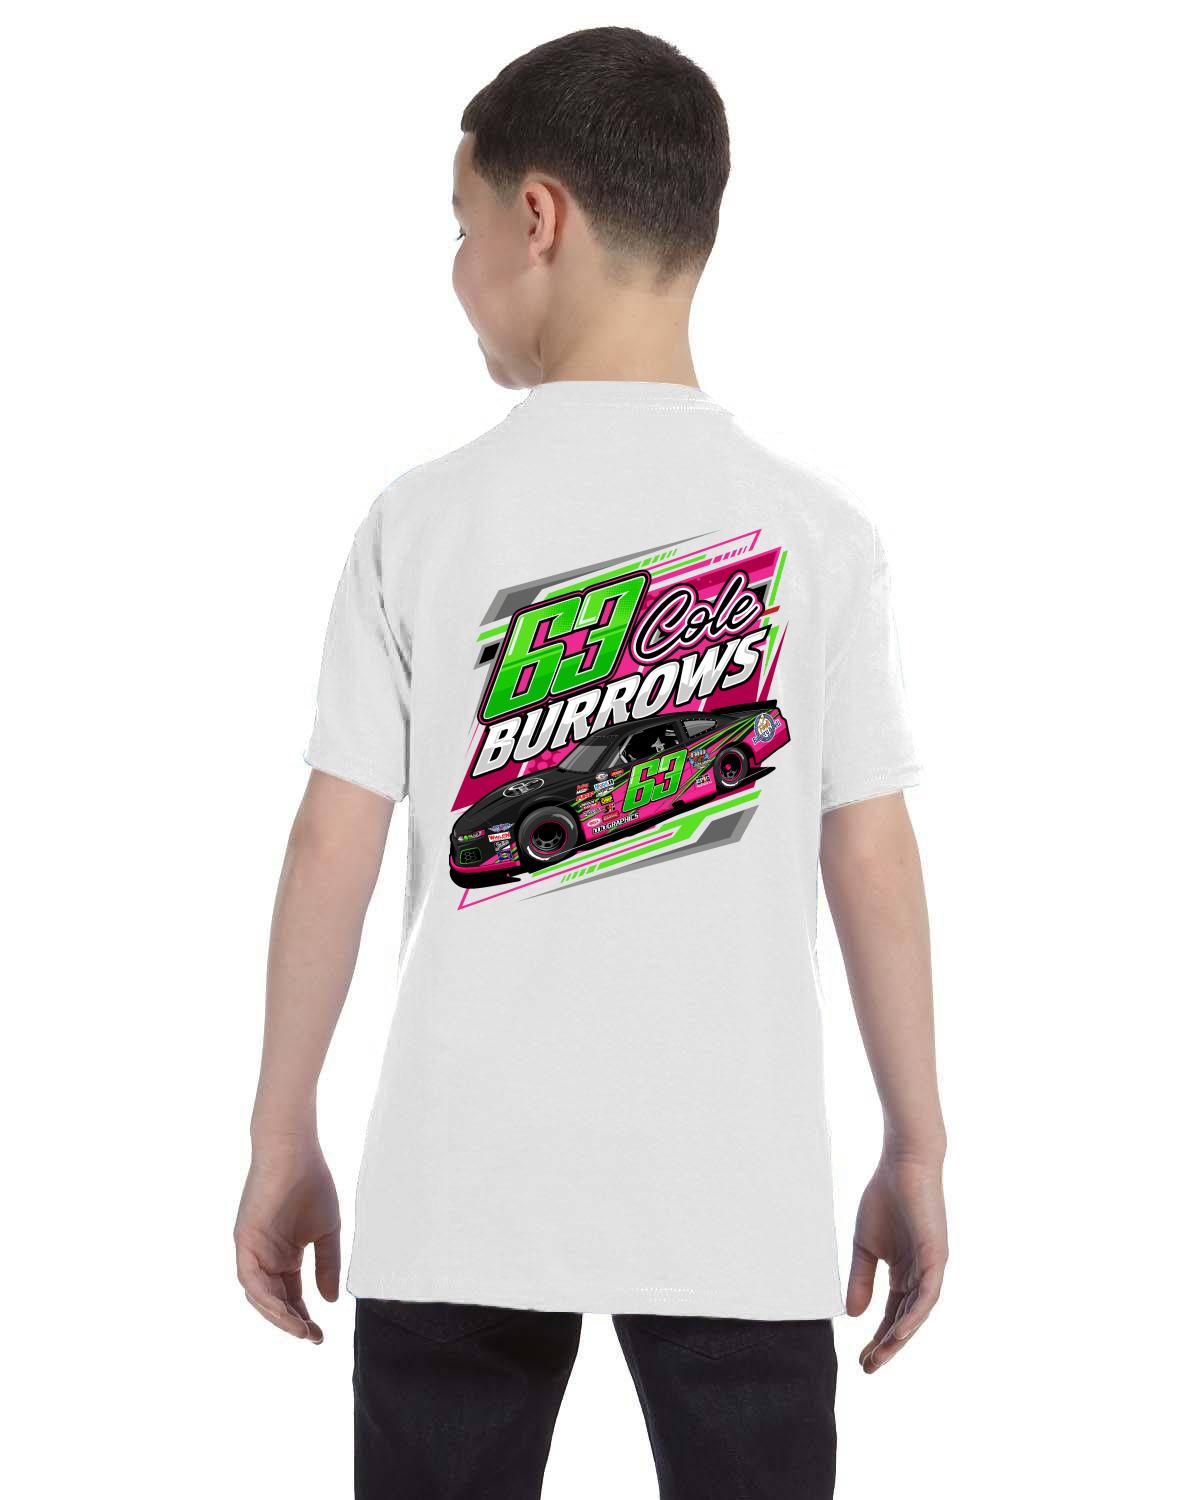 Cole Burrows Racing Youth T-Shirt